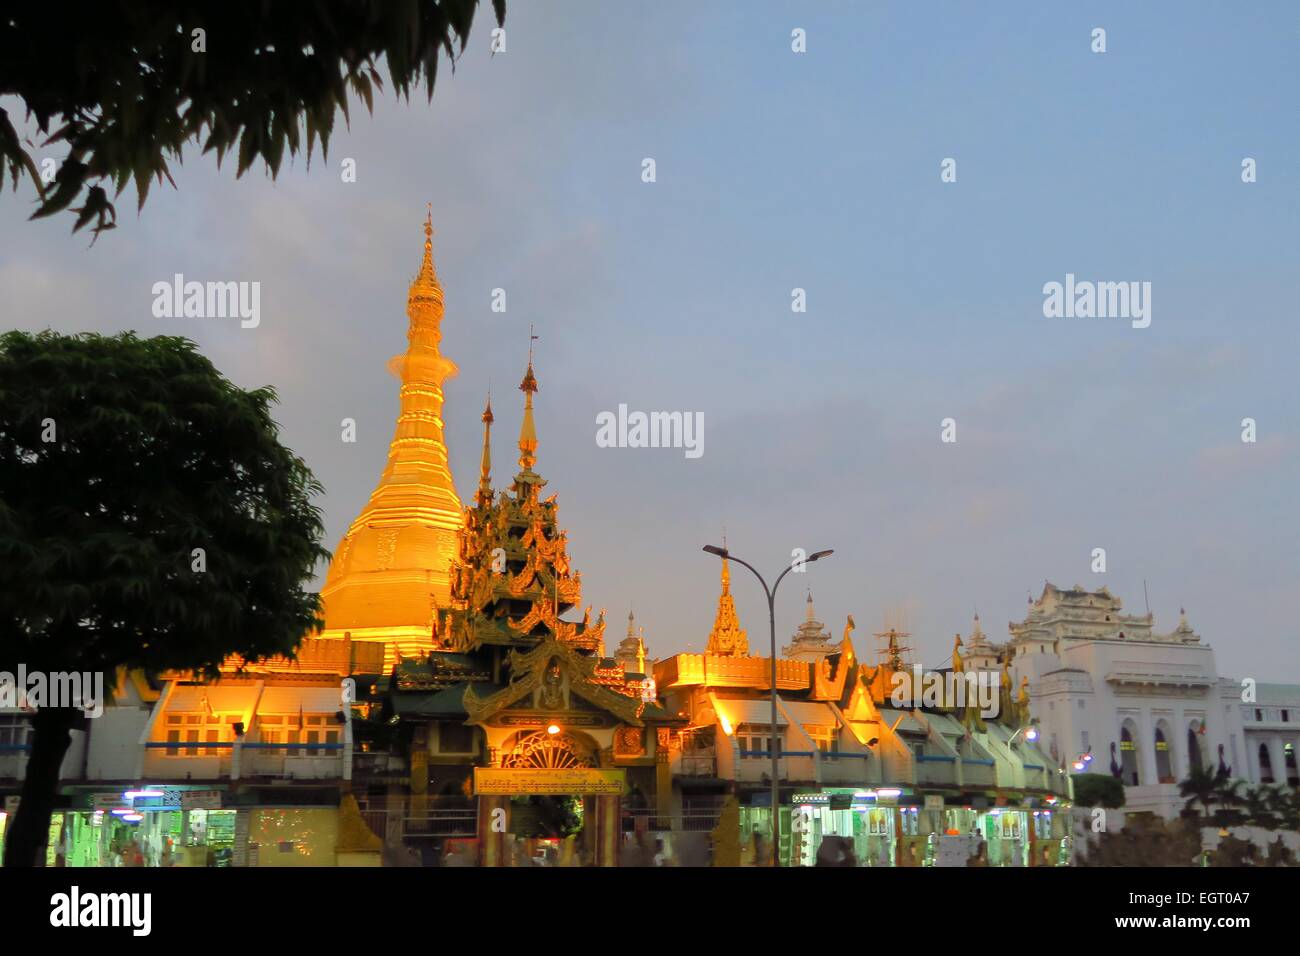 Illuminated Sule pagoda in Yangon, Myanmar Stock Photo